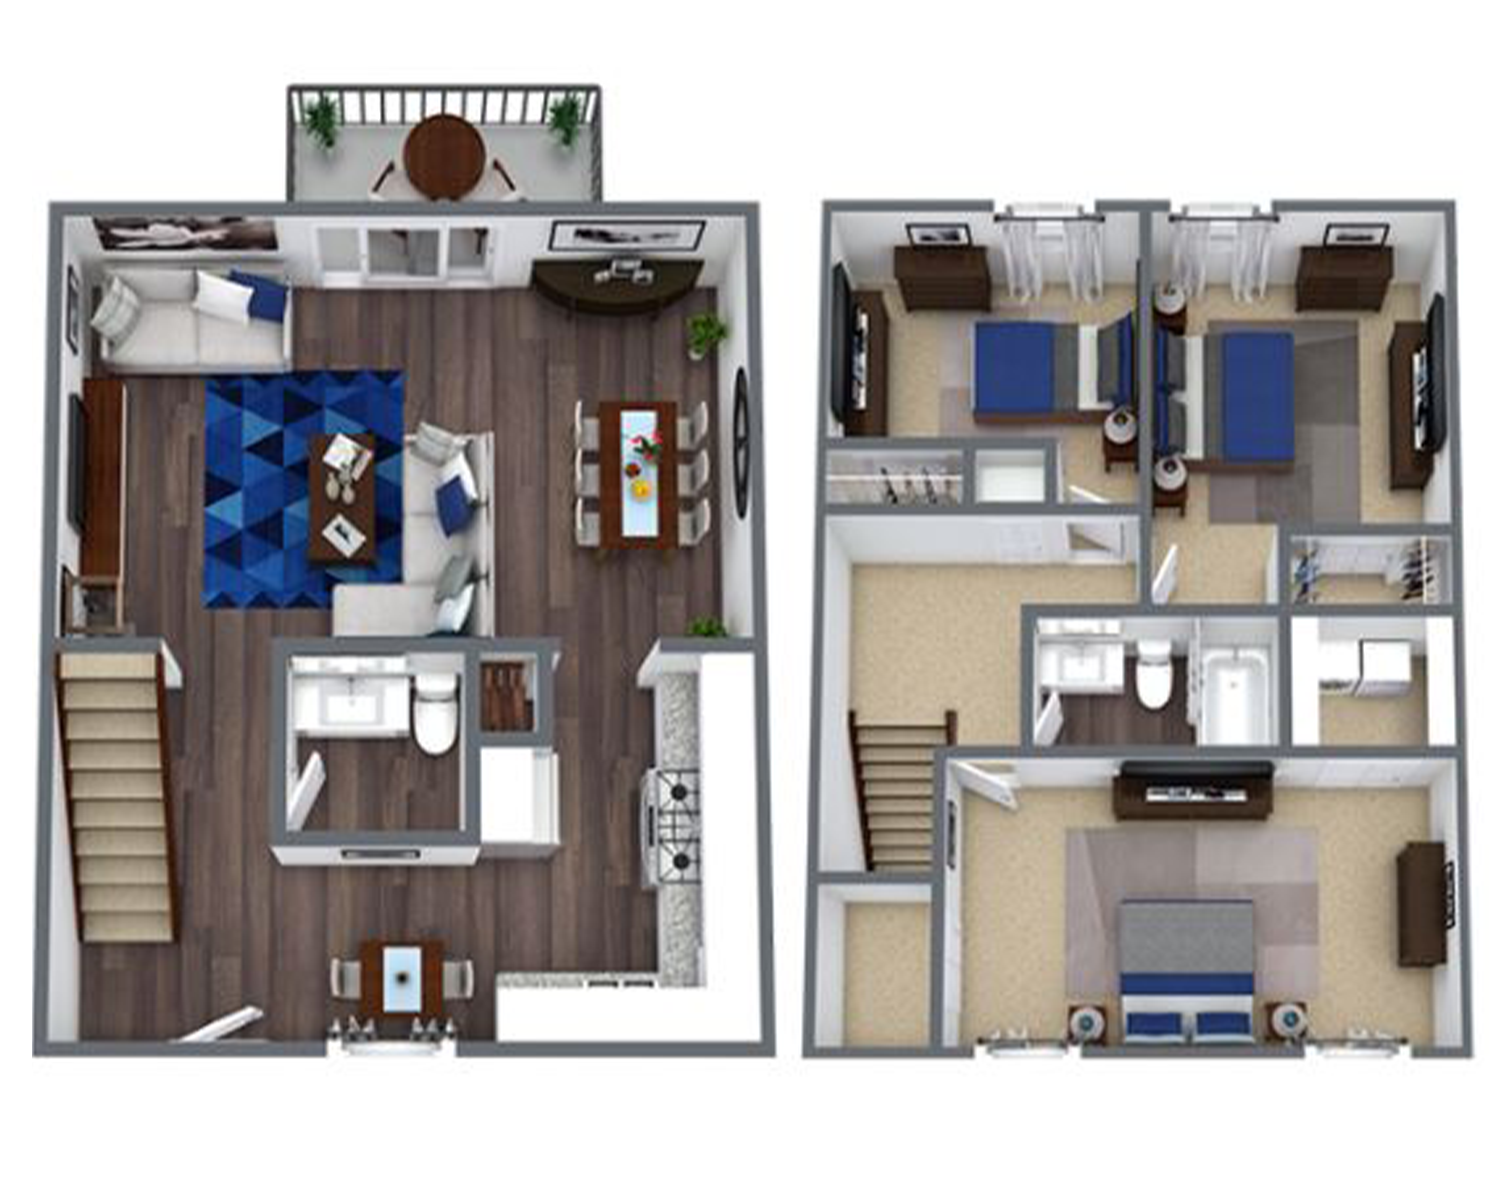 three bed 1.5 bath apartment floor plan at 1,422 square feet